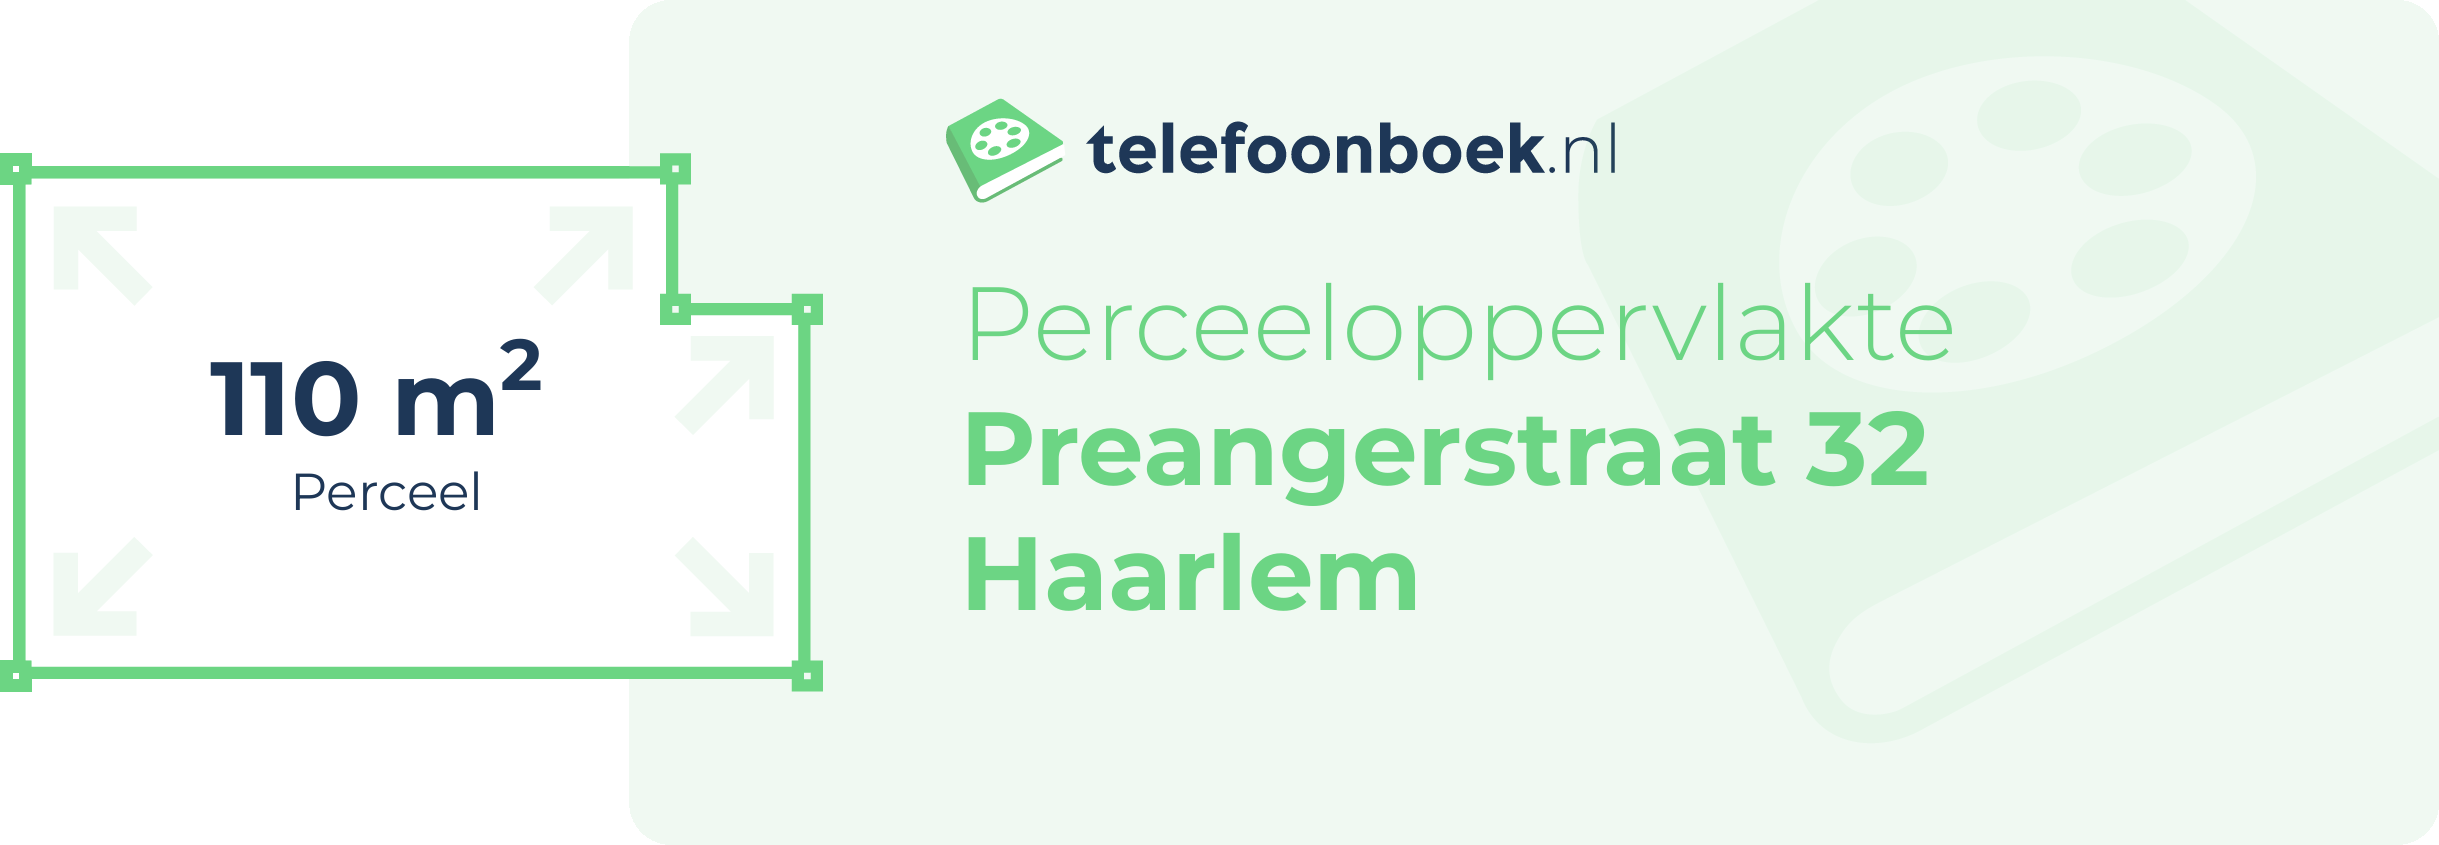 Perceeloppervlakte Preangerstraat 32 Haarlem